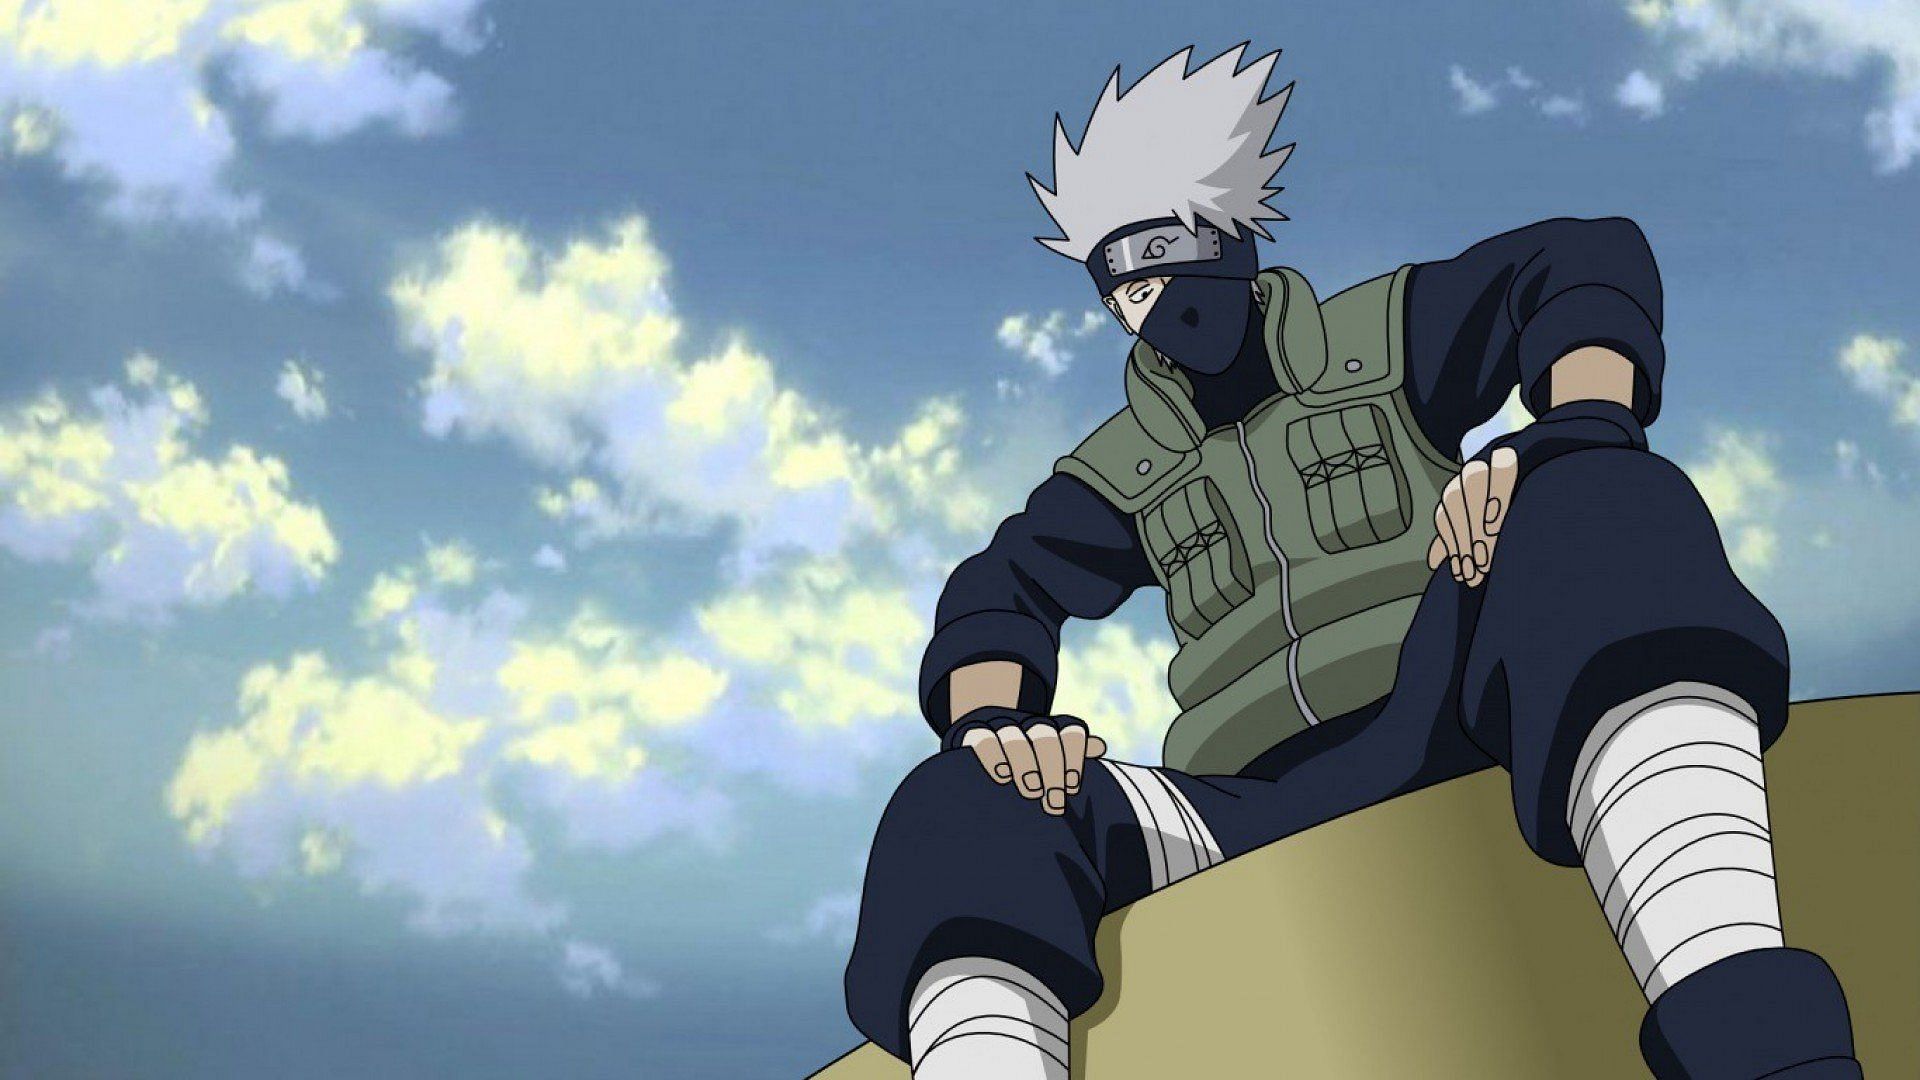 Kakashi as seen in the Naruto anime series (Image via Pierrot)